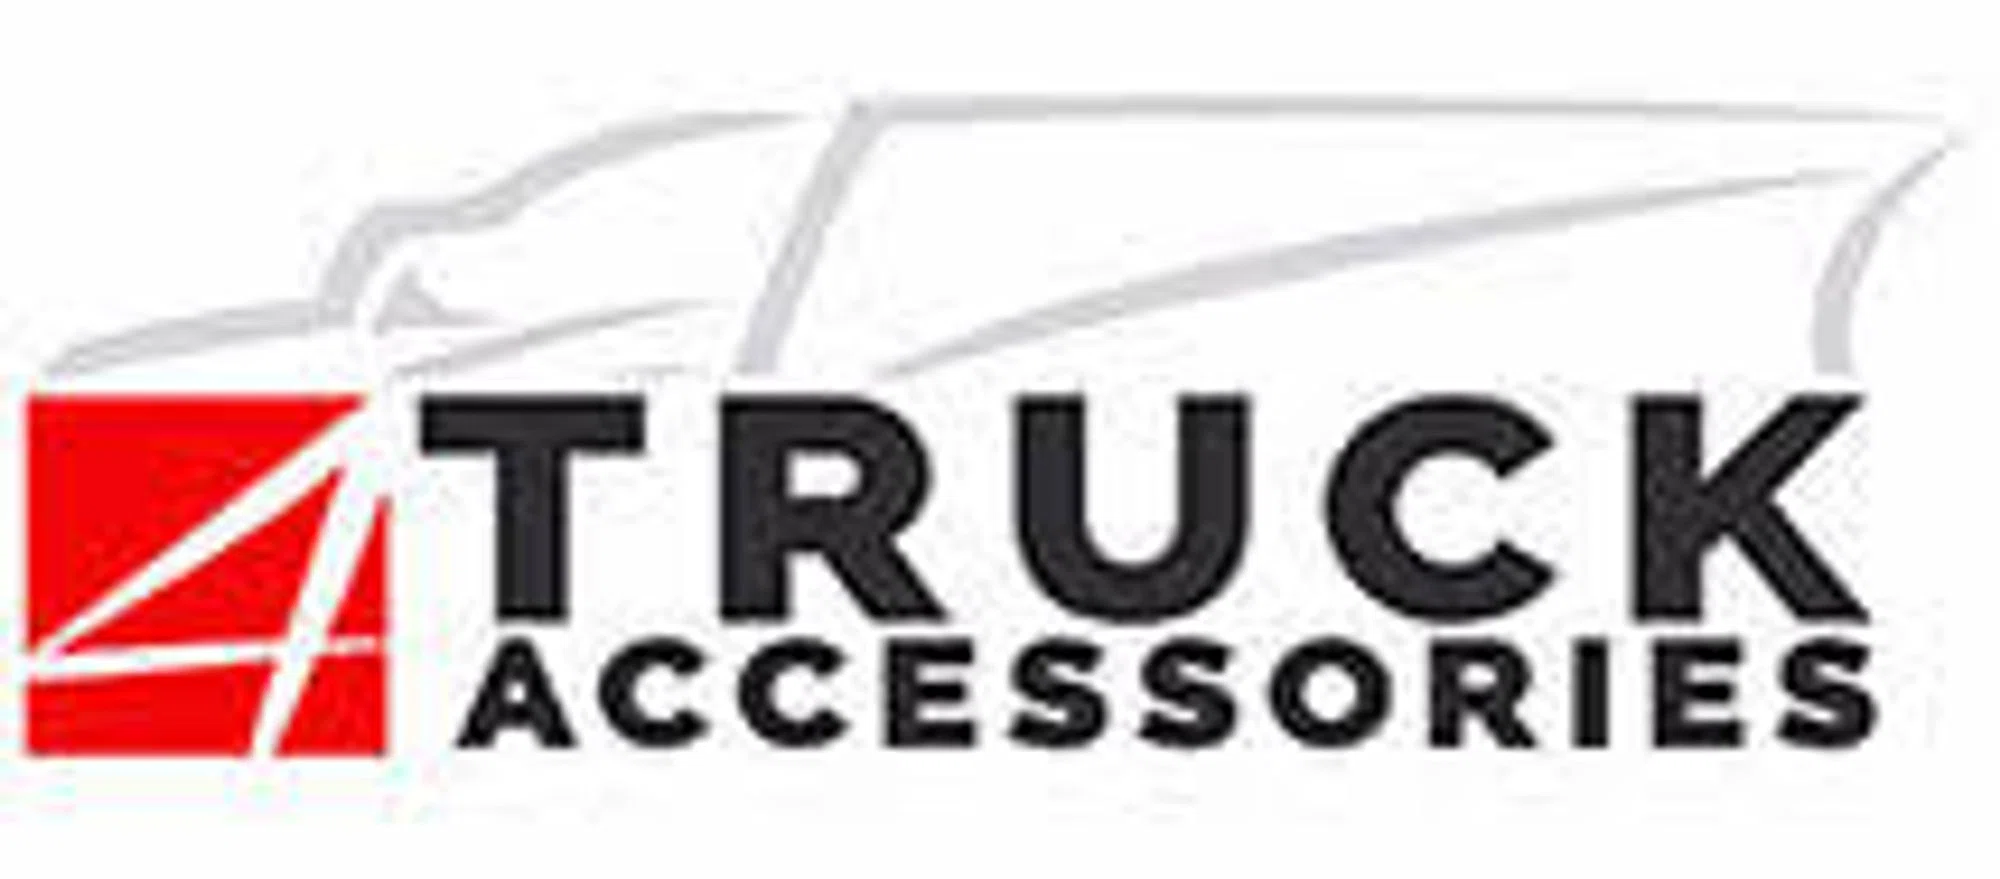 4 Truck-Accessories